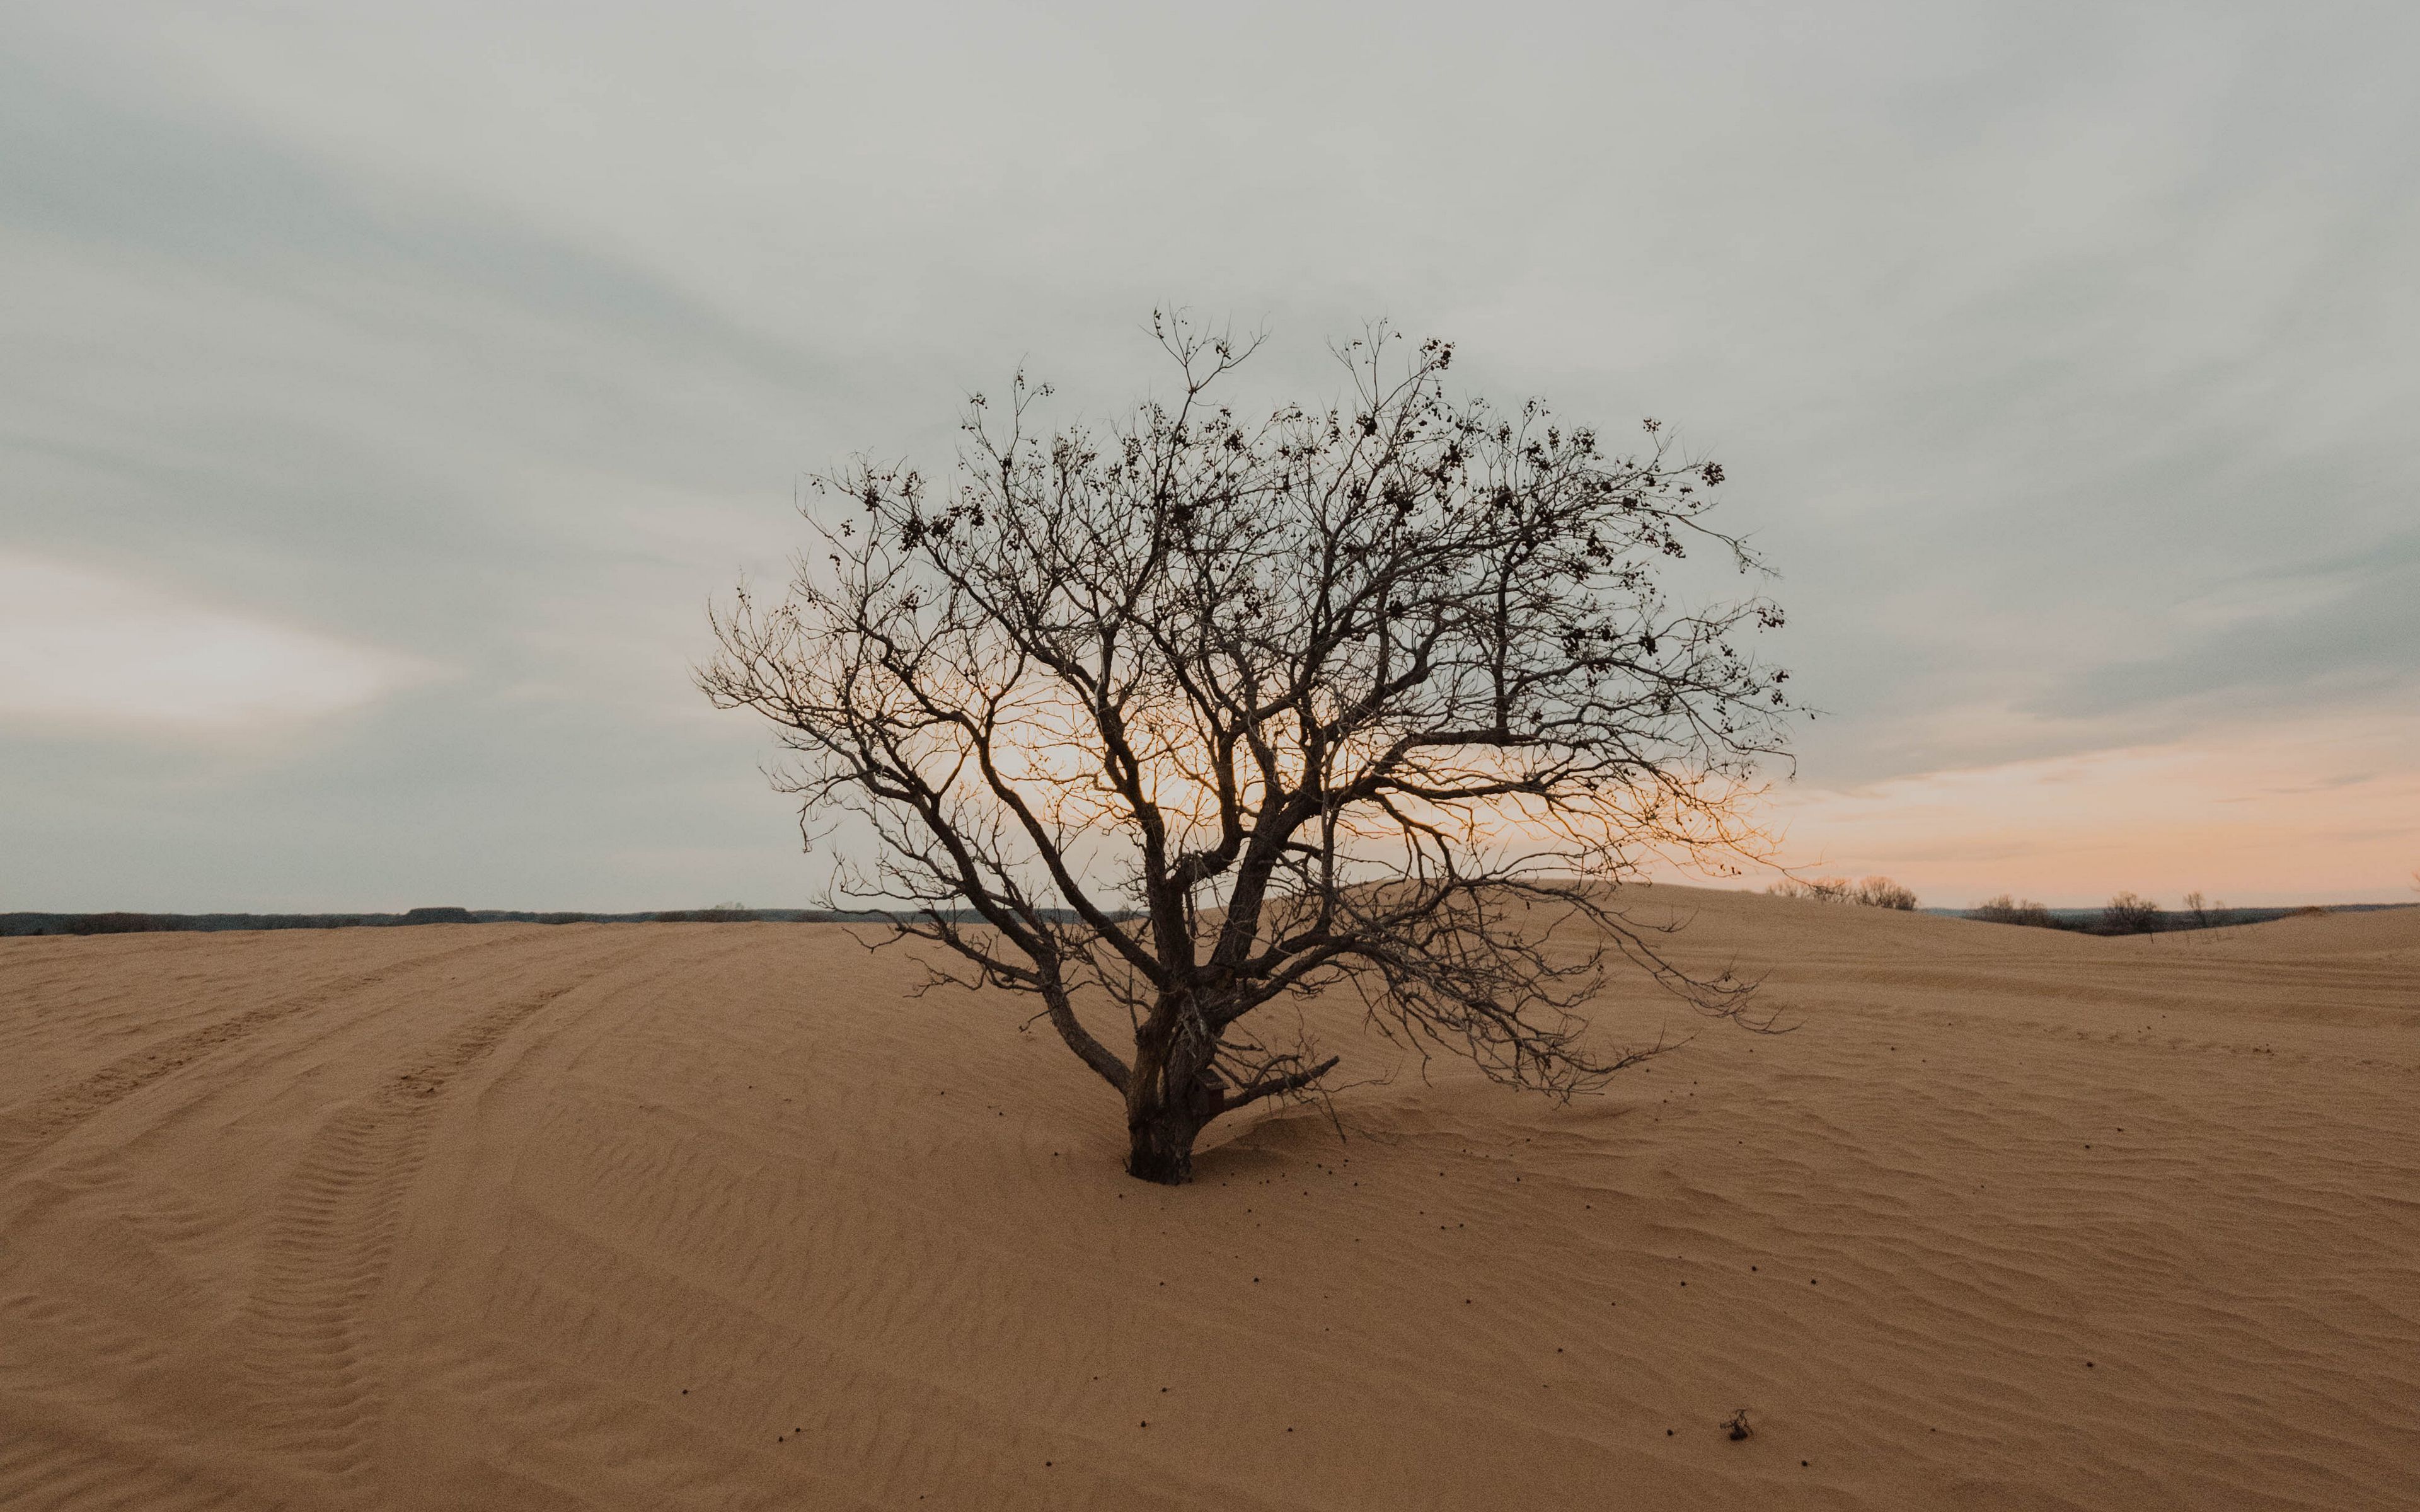 Download wallpaper 3840x2400 tree, desert, sand, dry, lonely 4k